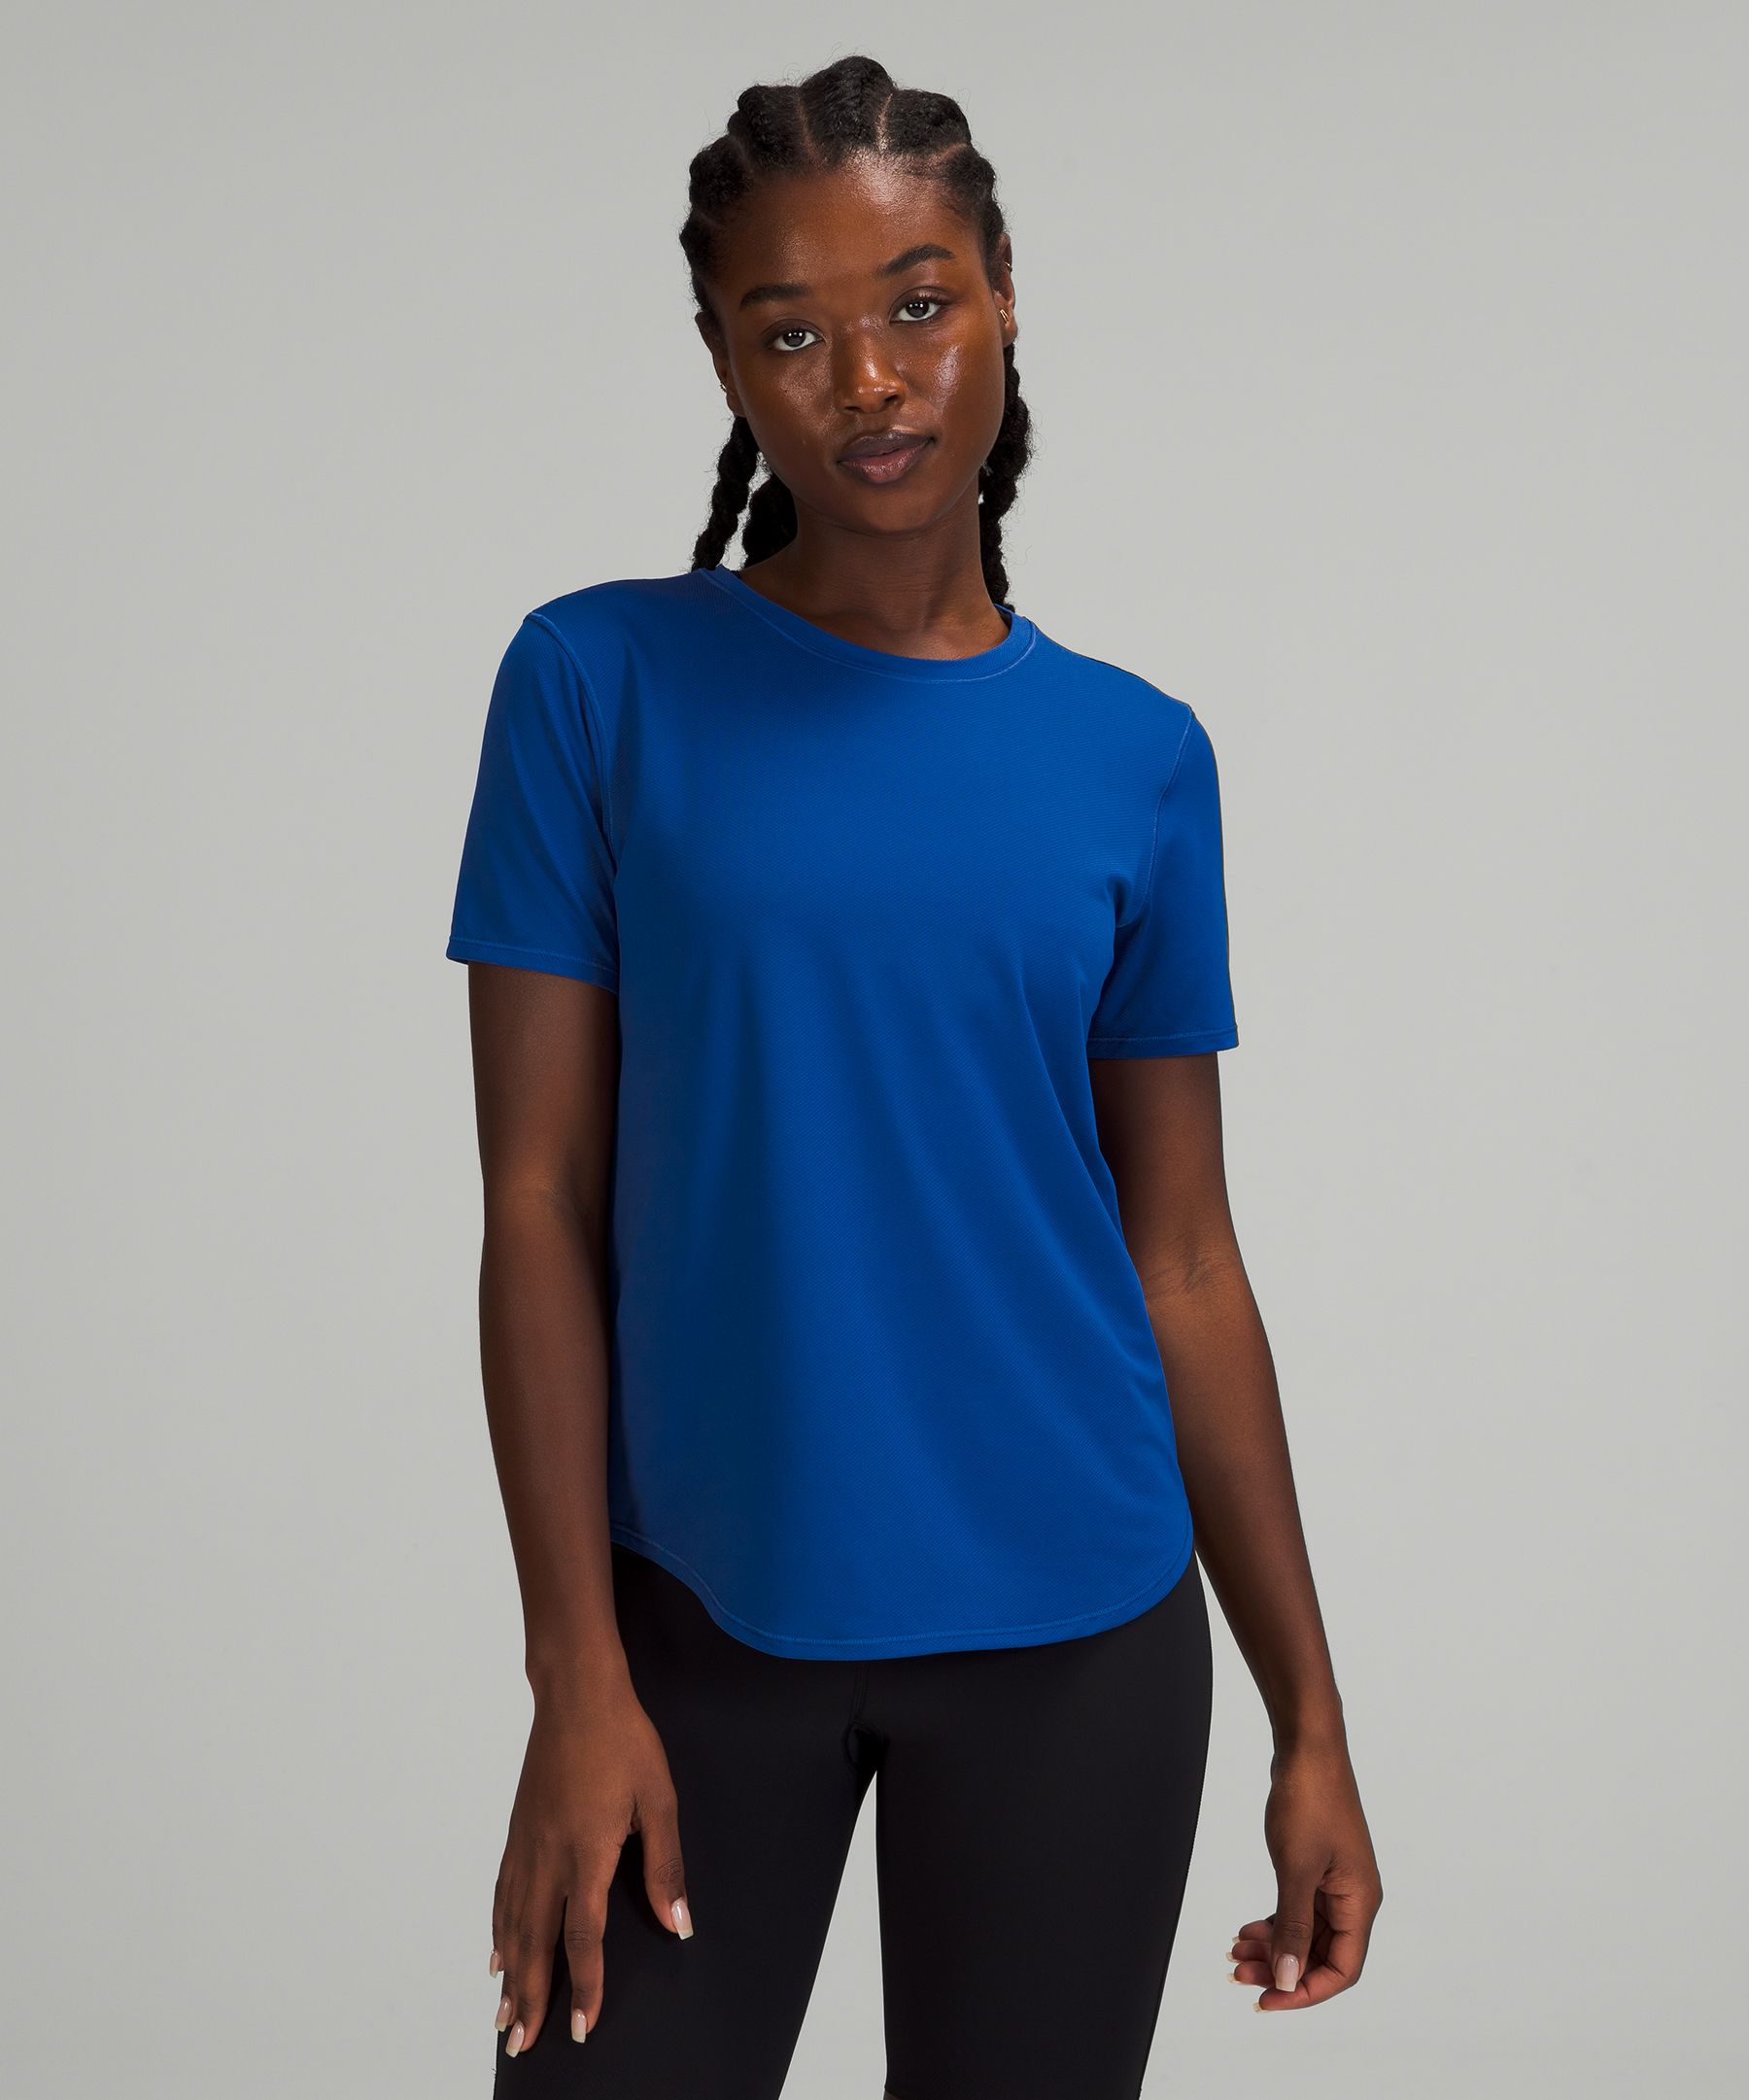 Lululemon High Neck Running And Training T-shirt In Blue